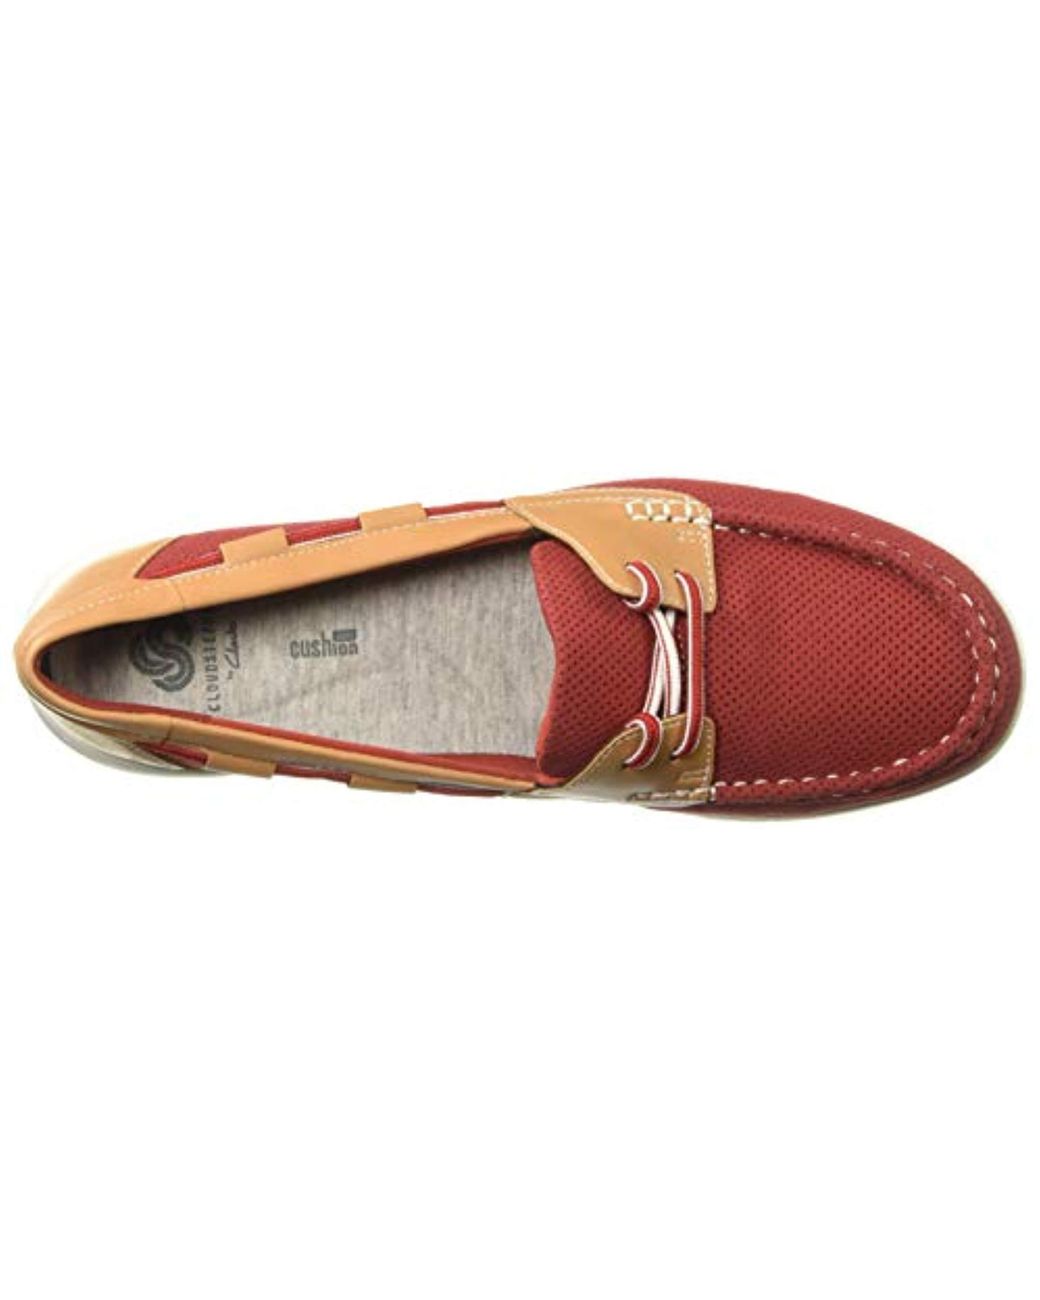 Clarks Jocolin Vista Boat Shoes in Red | Lyst